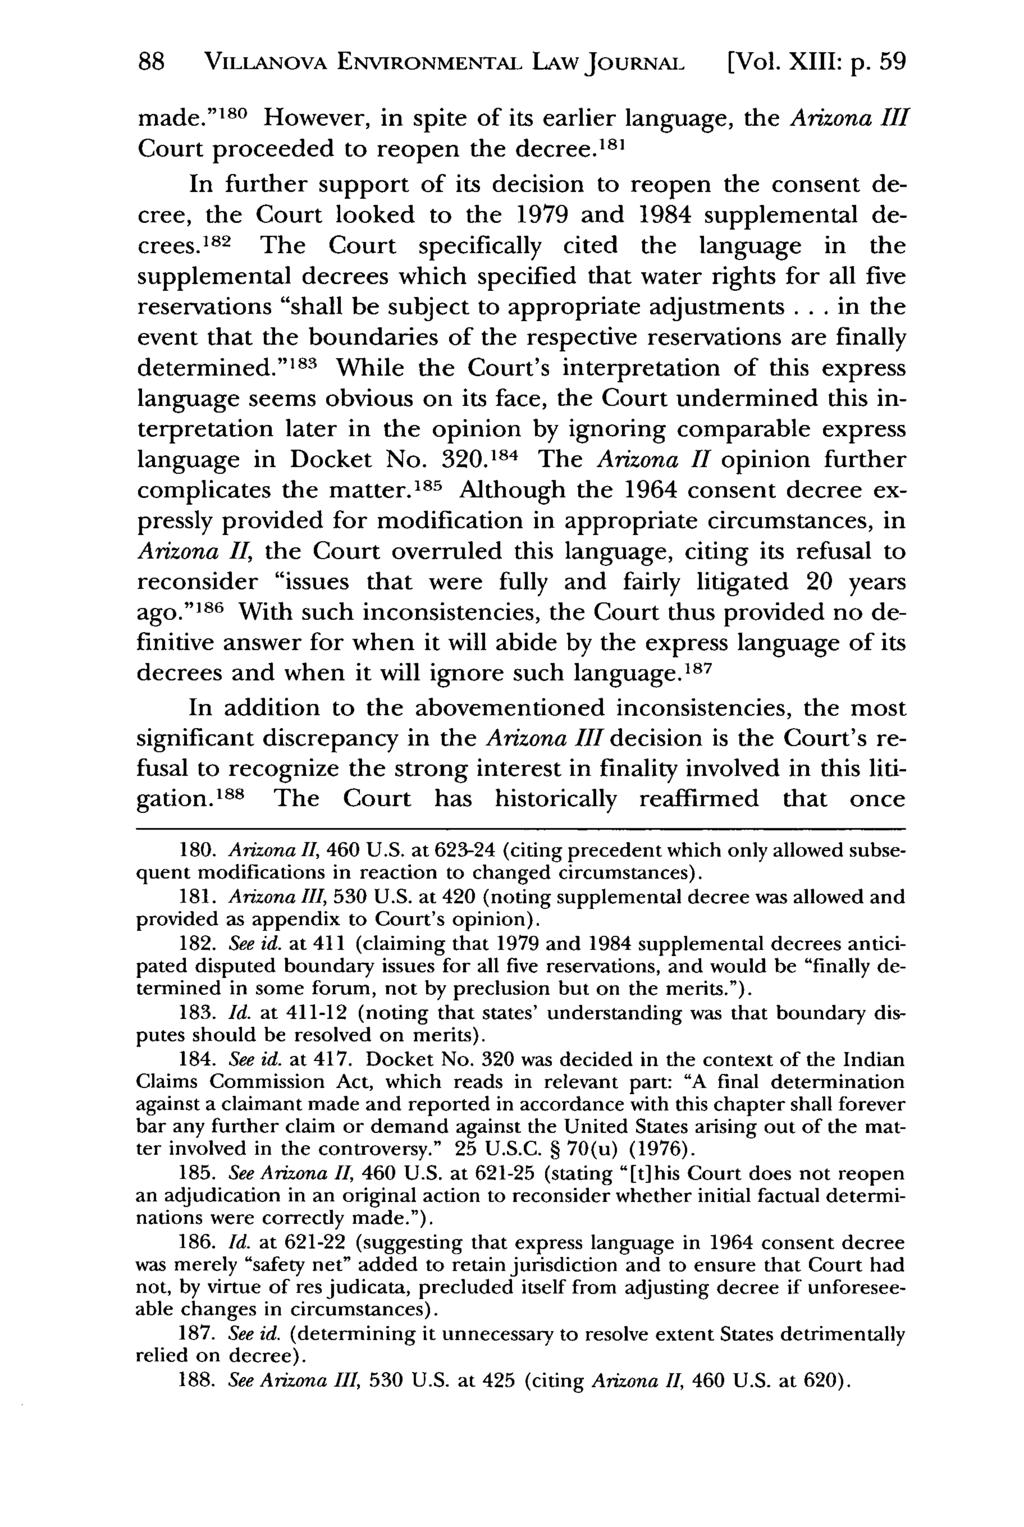 88 VILLANovA Villanova Environmental ENVIRONMENTAL Law Journal, LAw Vol. JouRNAi. 13, Iss. 1 [2002], Art. [Vol. 2 XIII: p. 59 made.